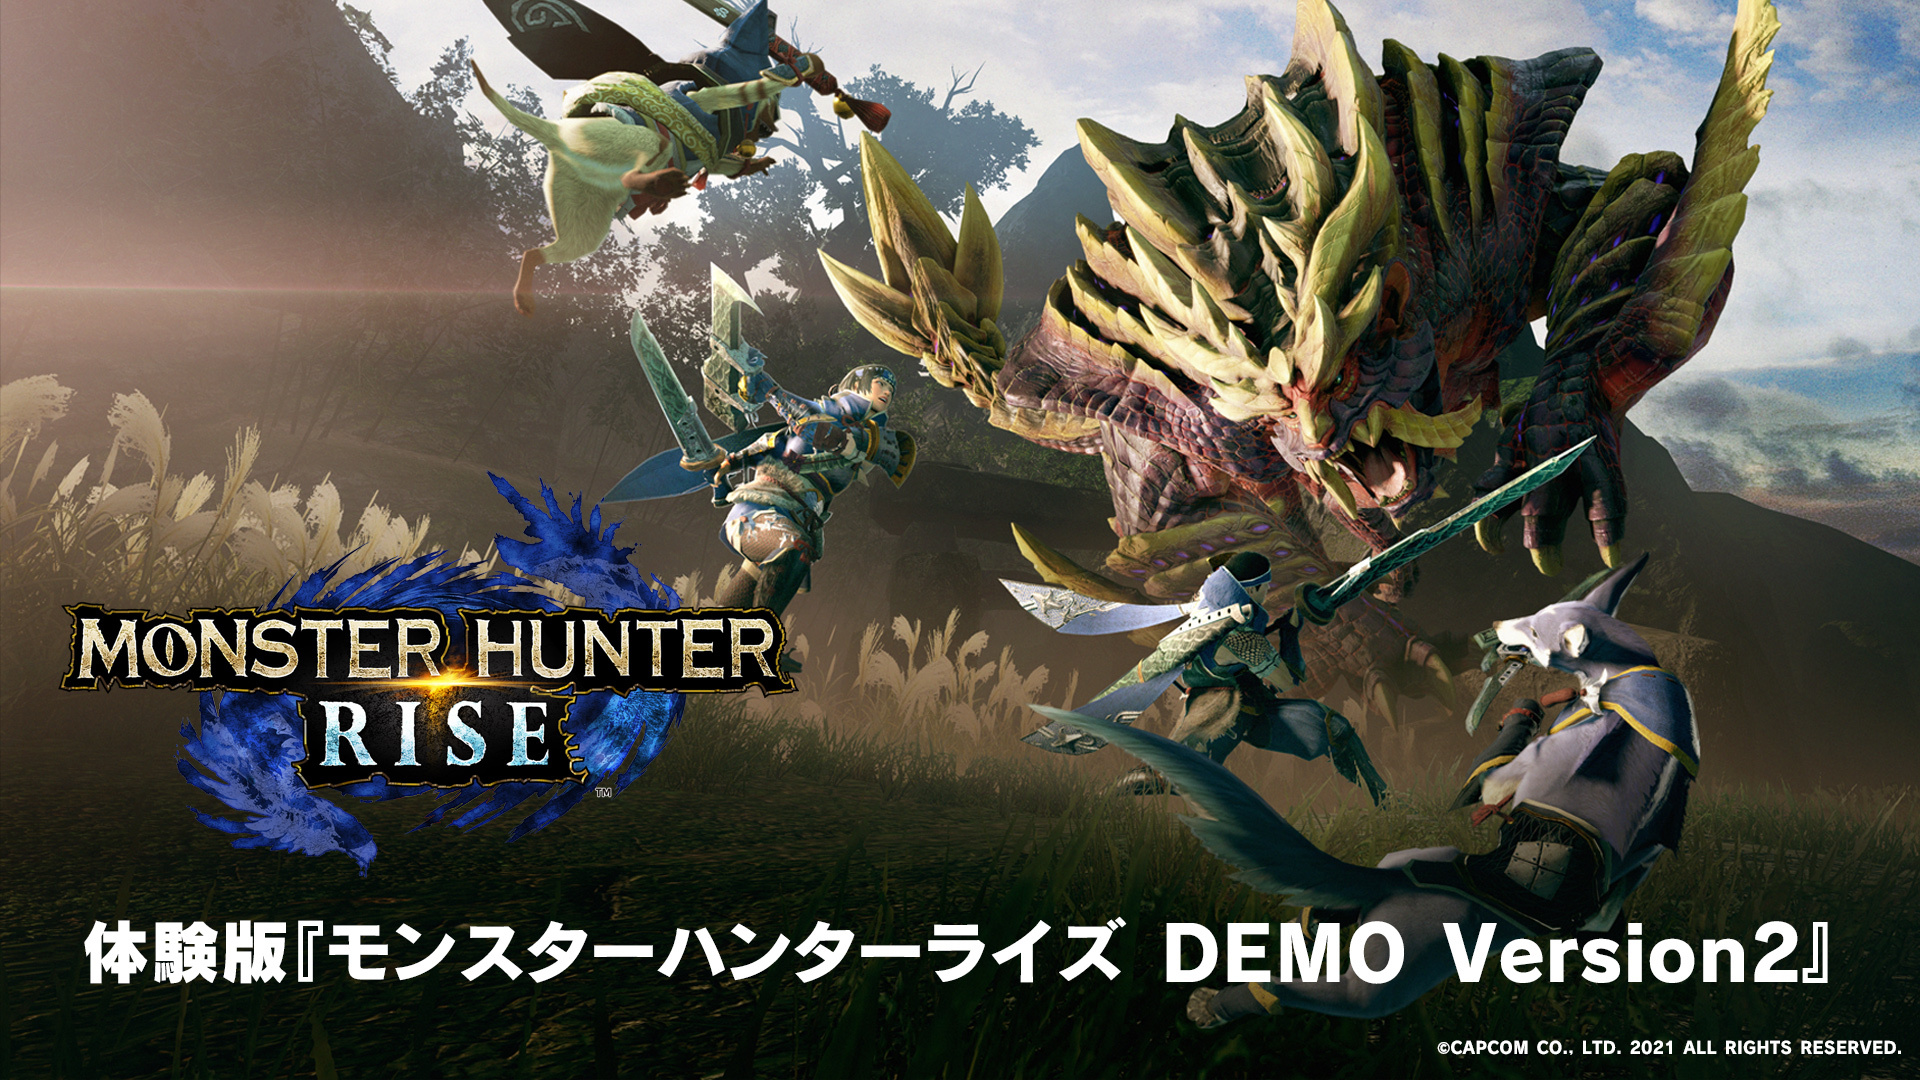 The Monster Hunter Rise Demo Version2